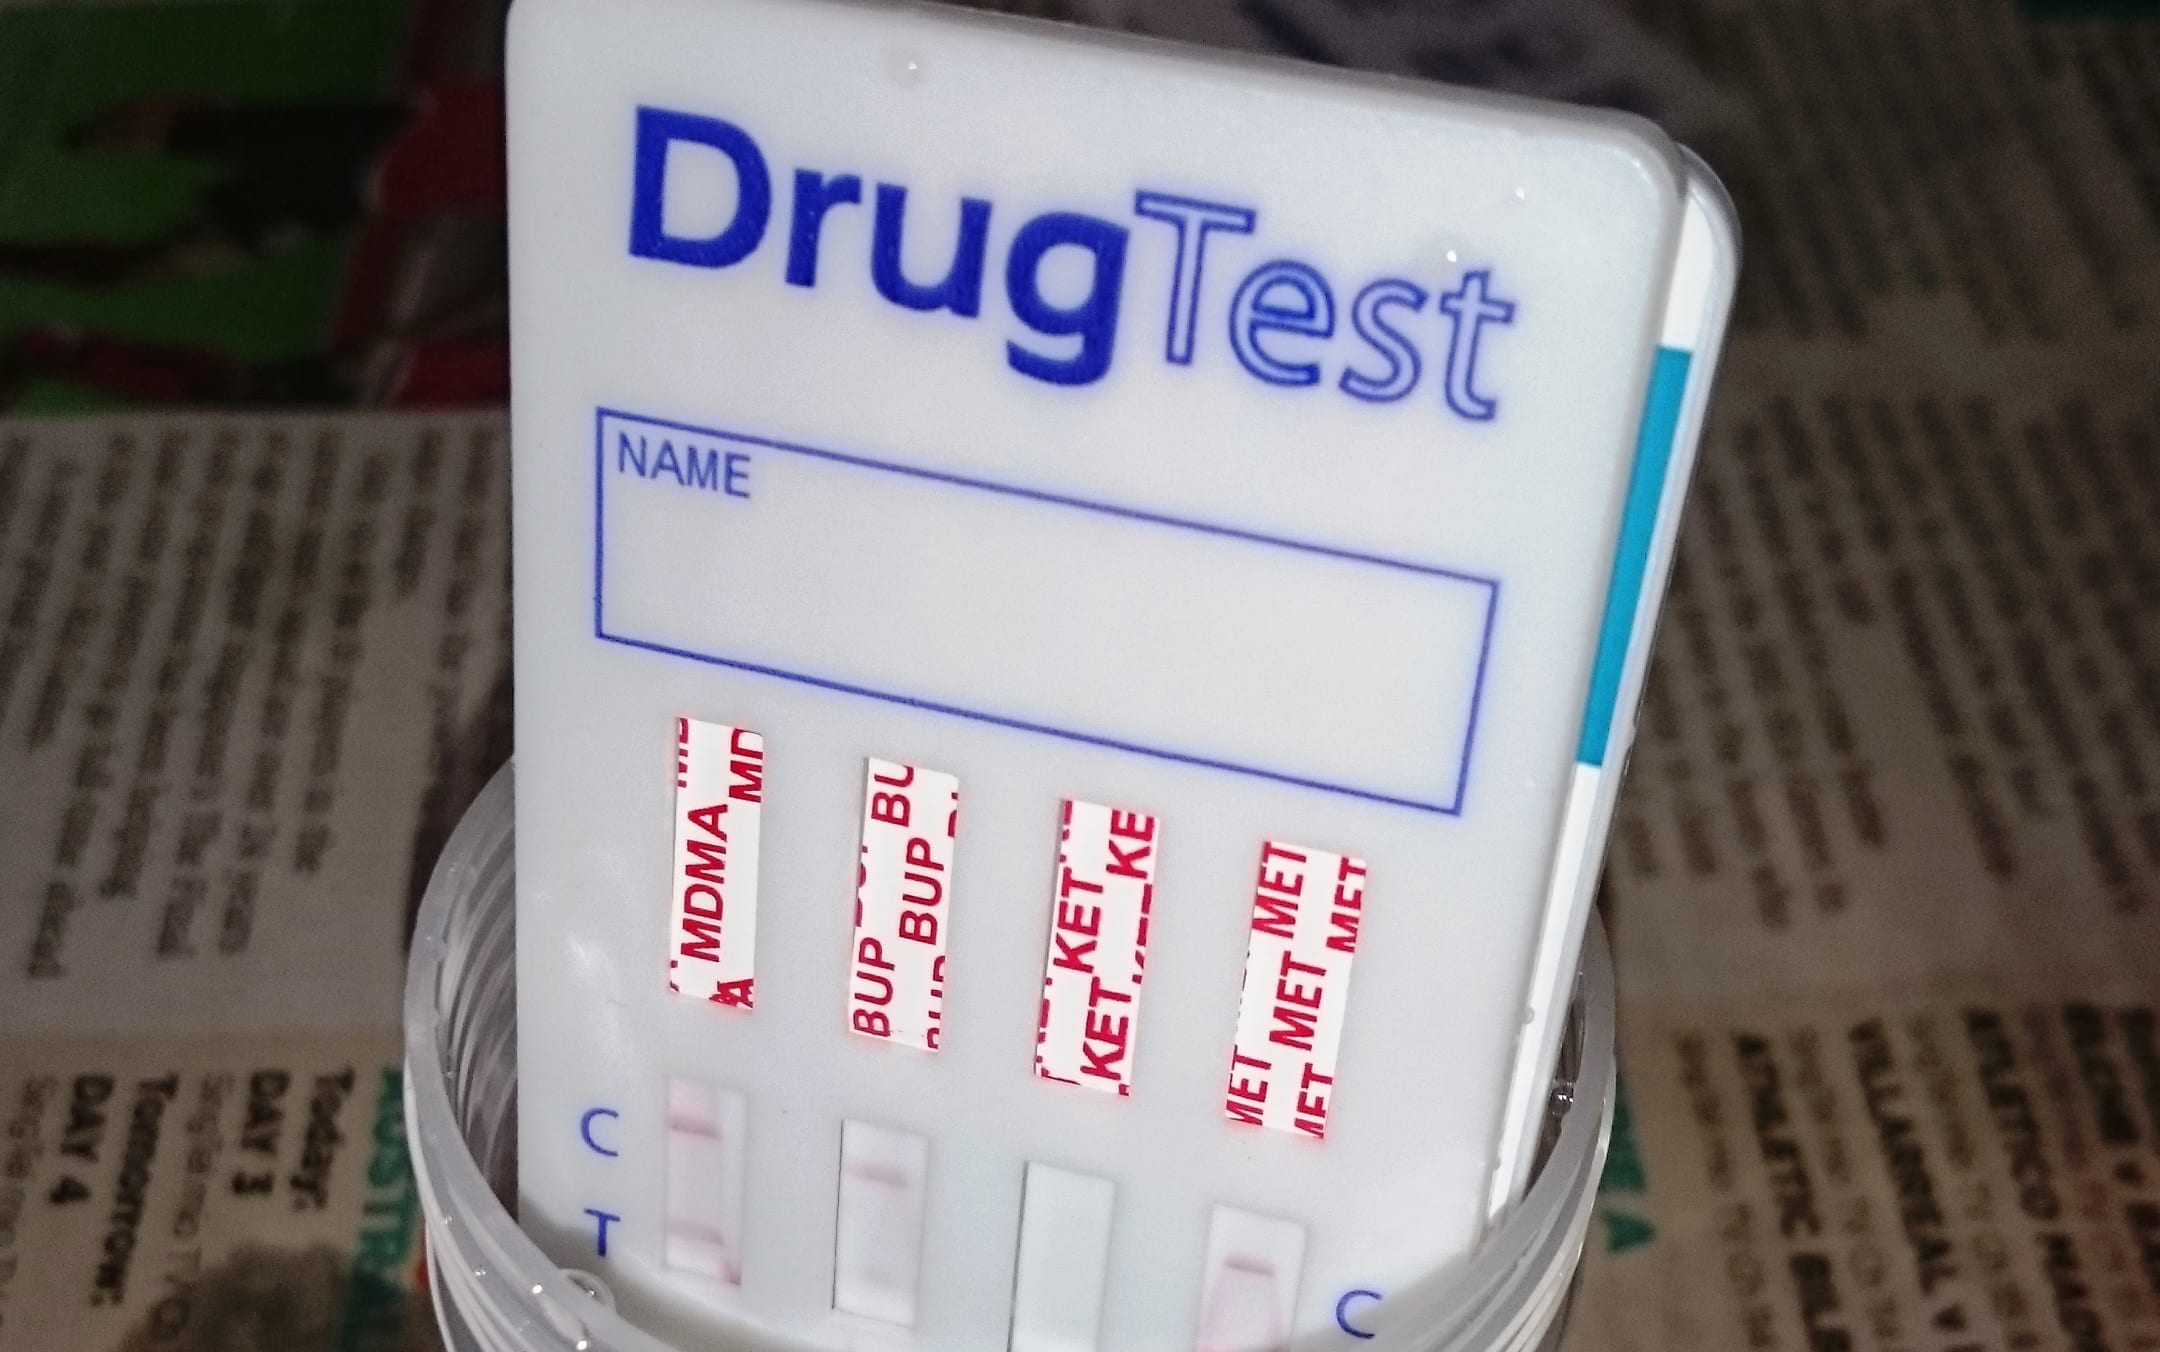 Few beneficiaries fail pre-employment drug tests